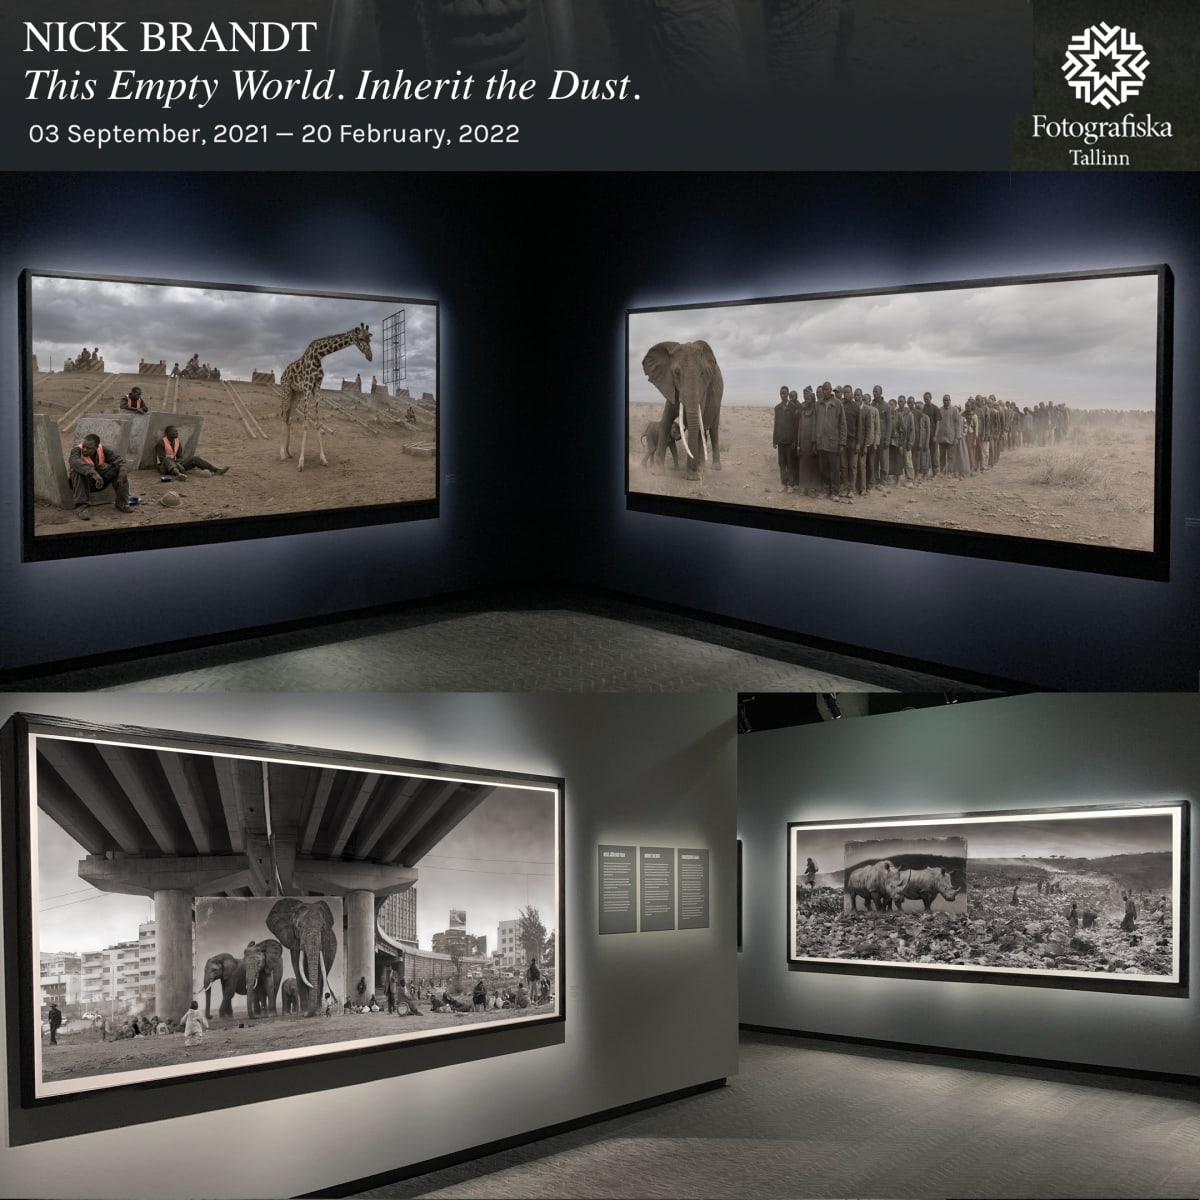 Nick Brandt Solo Exhibition at Fotografiska